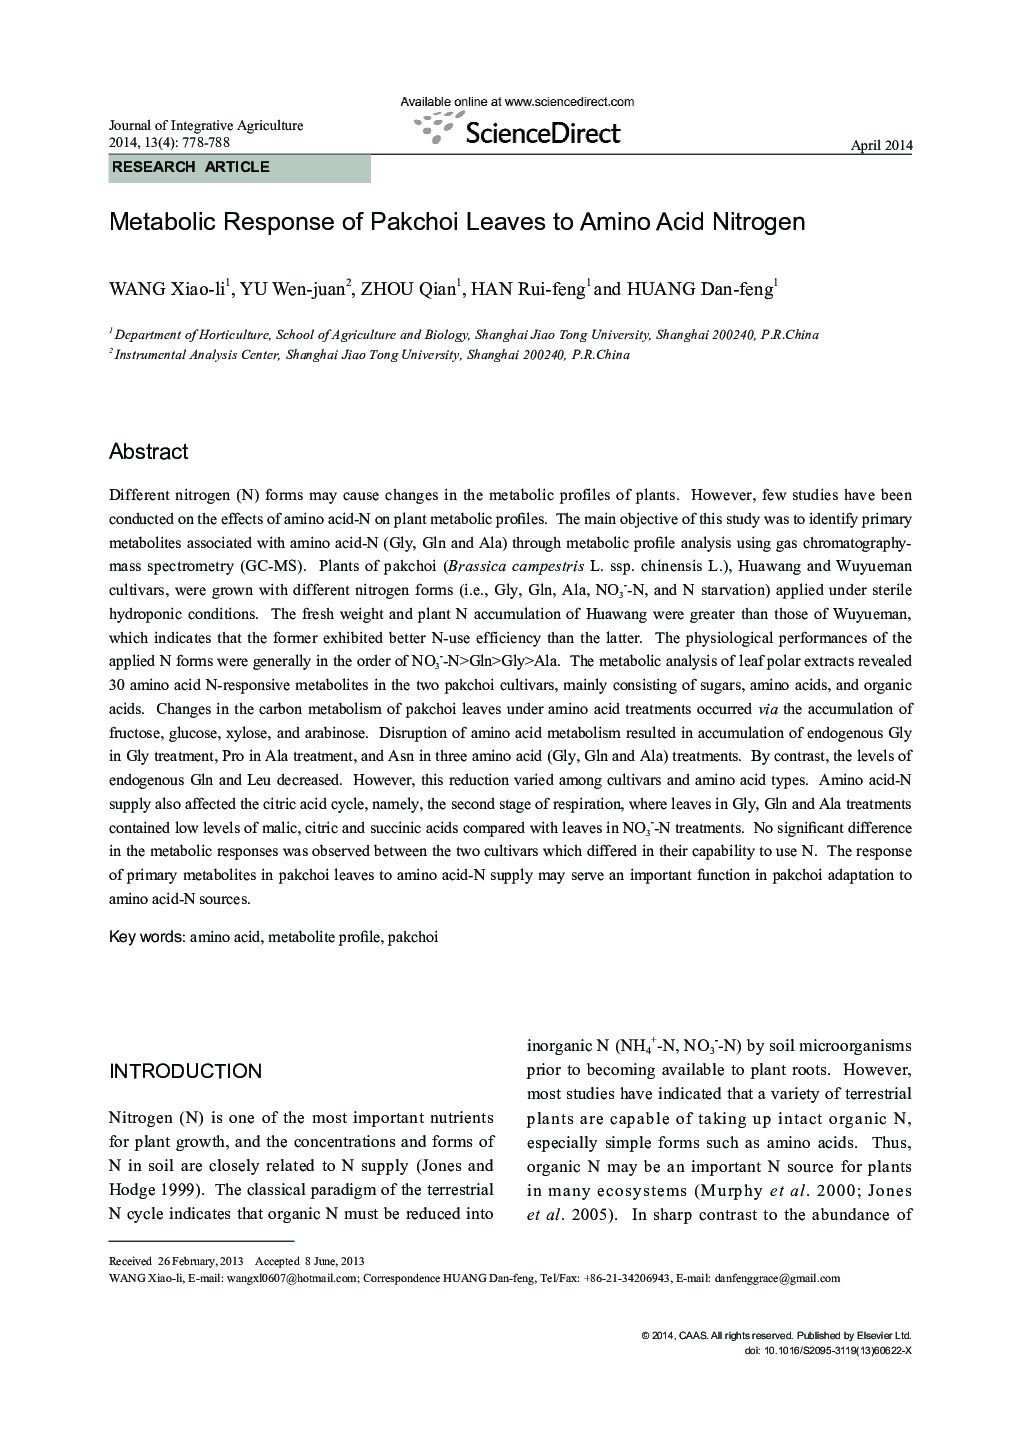 Metabolic Response of Pakchoi Leaves to Amino Acid Nitrogen